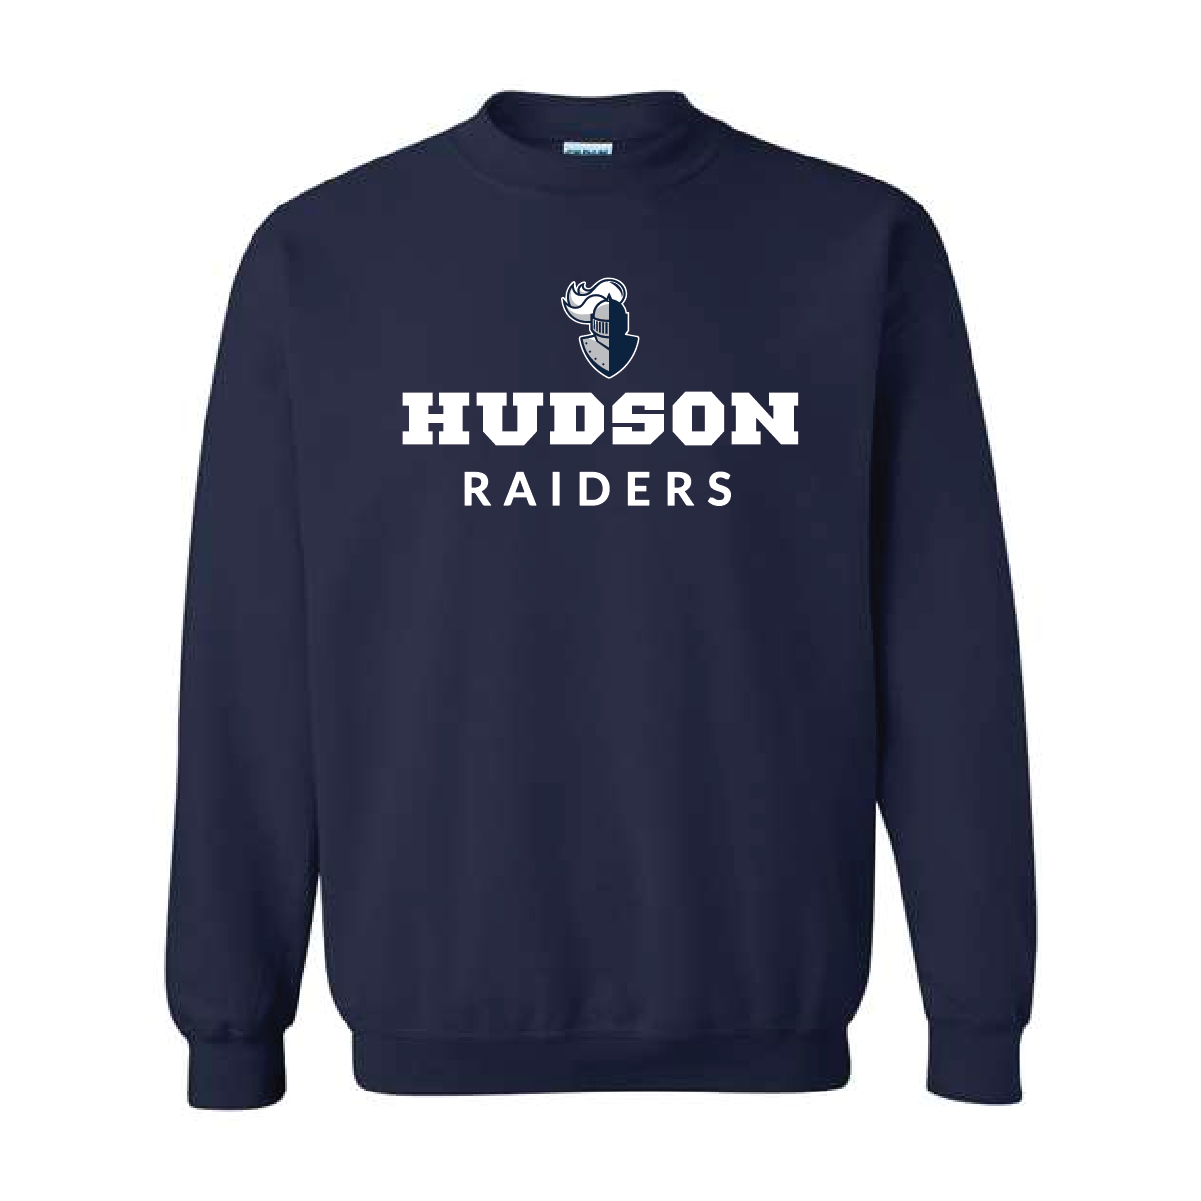 Hudson Raiders Online Crewneck Sweatshirt - Adult and Youth